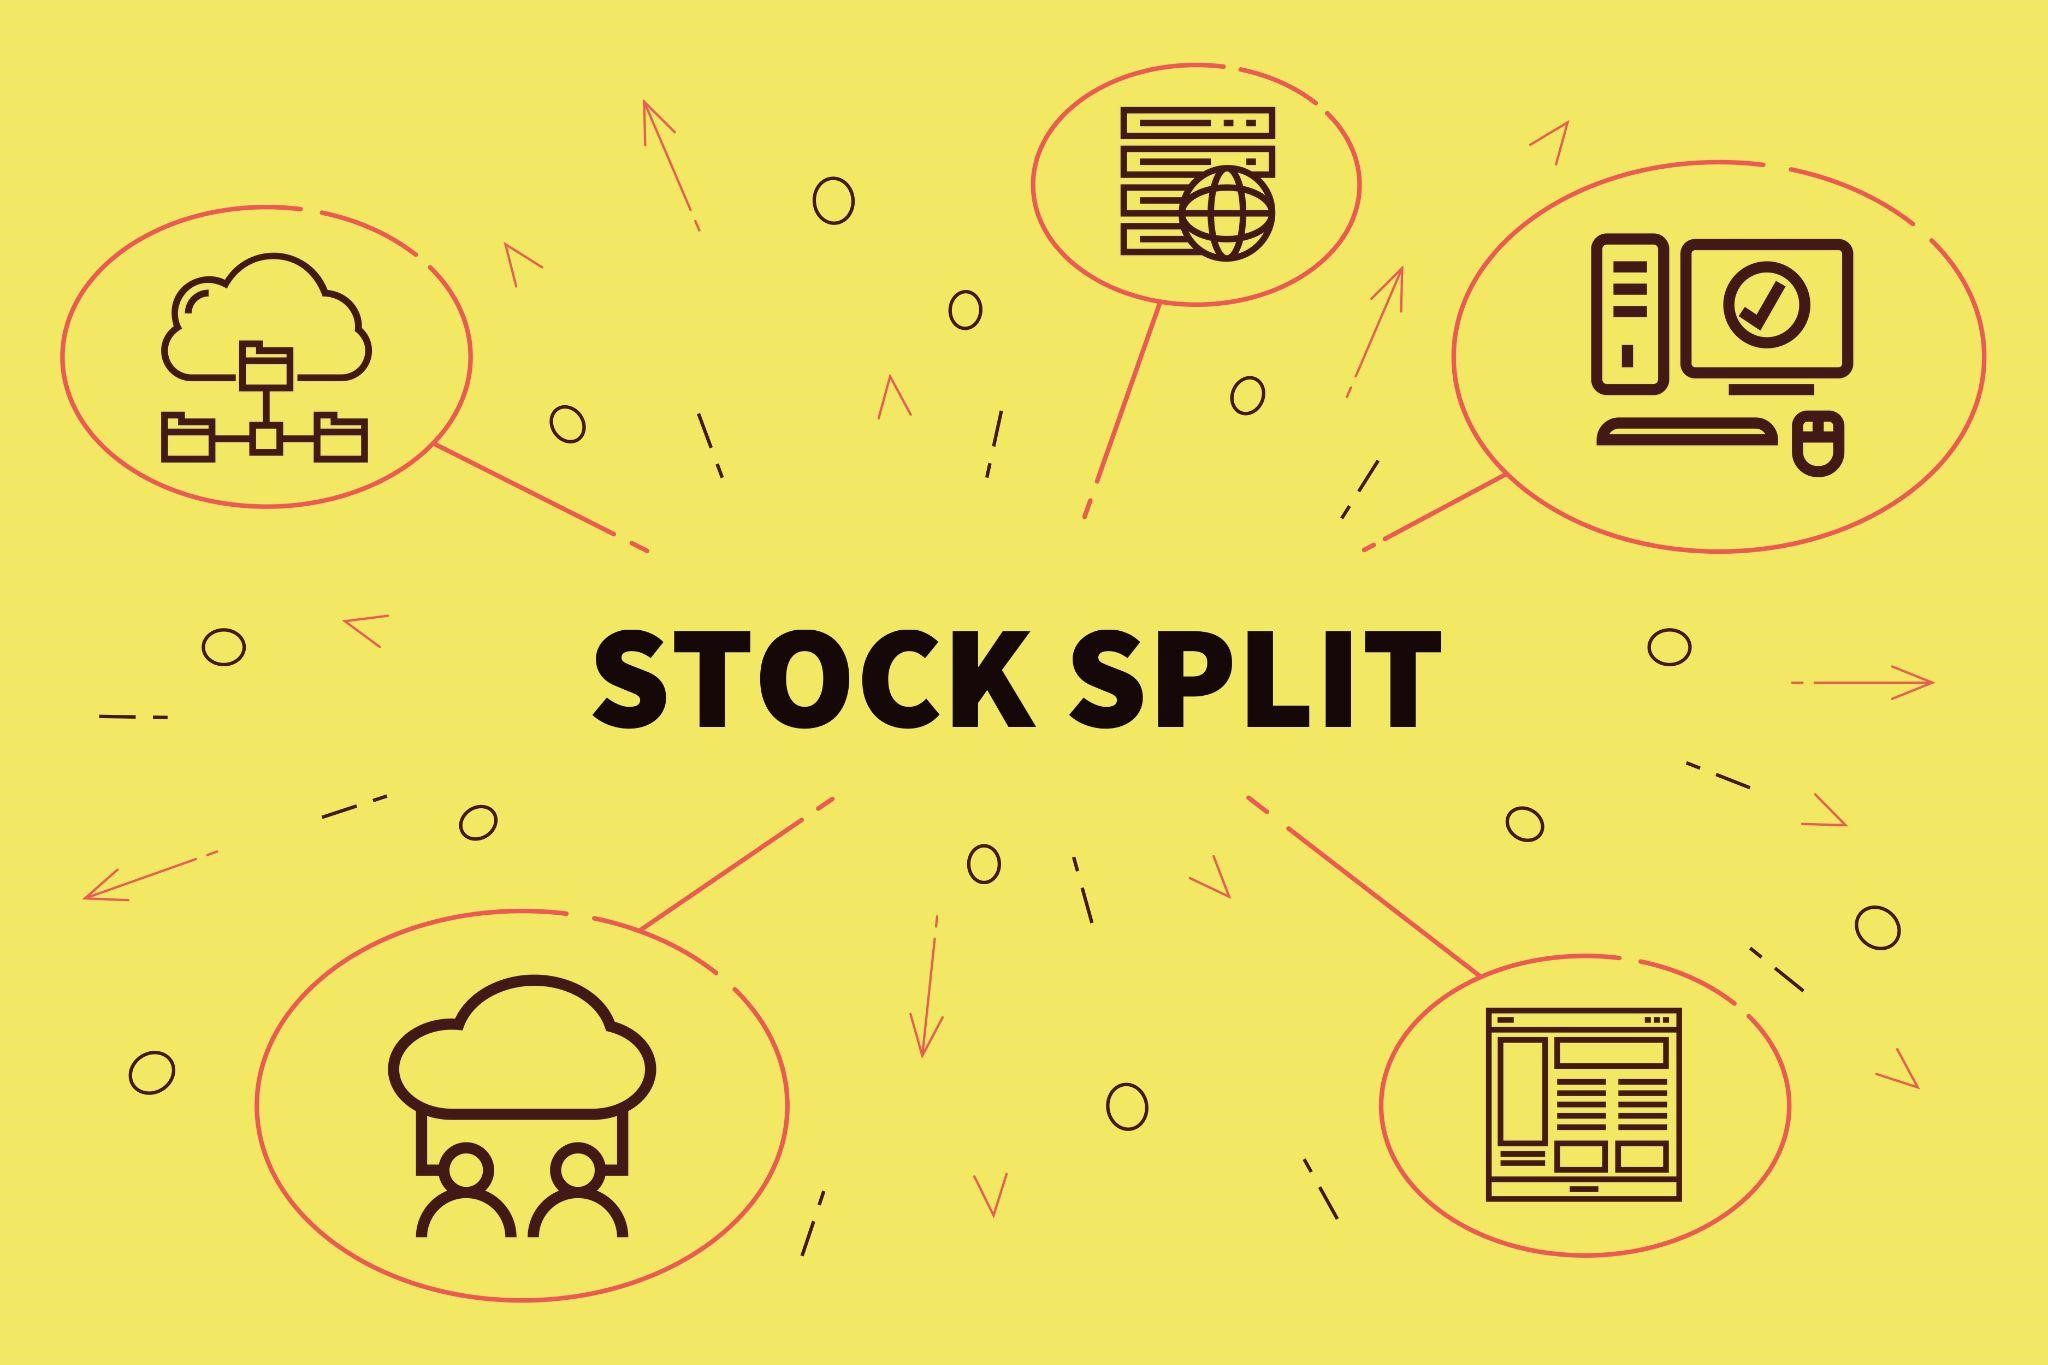 Stock Split: BCL Industriesએ સ્ટોક સ્પ્લિટ માટે રેકોર્ડ ડેટ જારી કરી, શેર 7 ટકા ઉછળ્યો